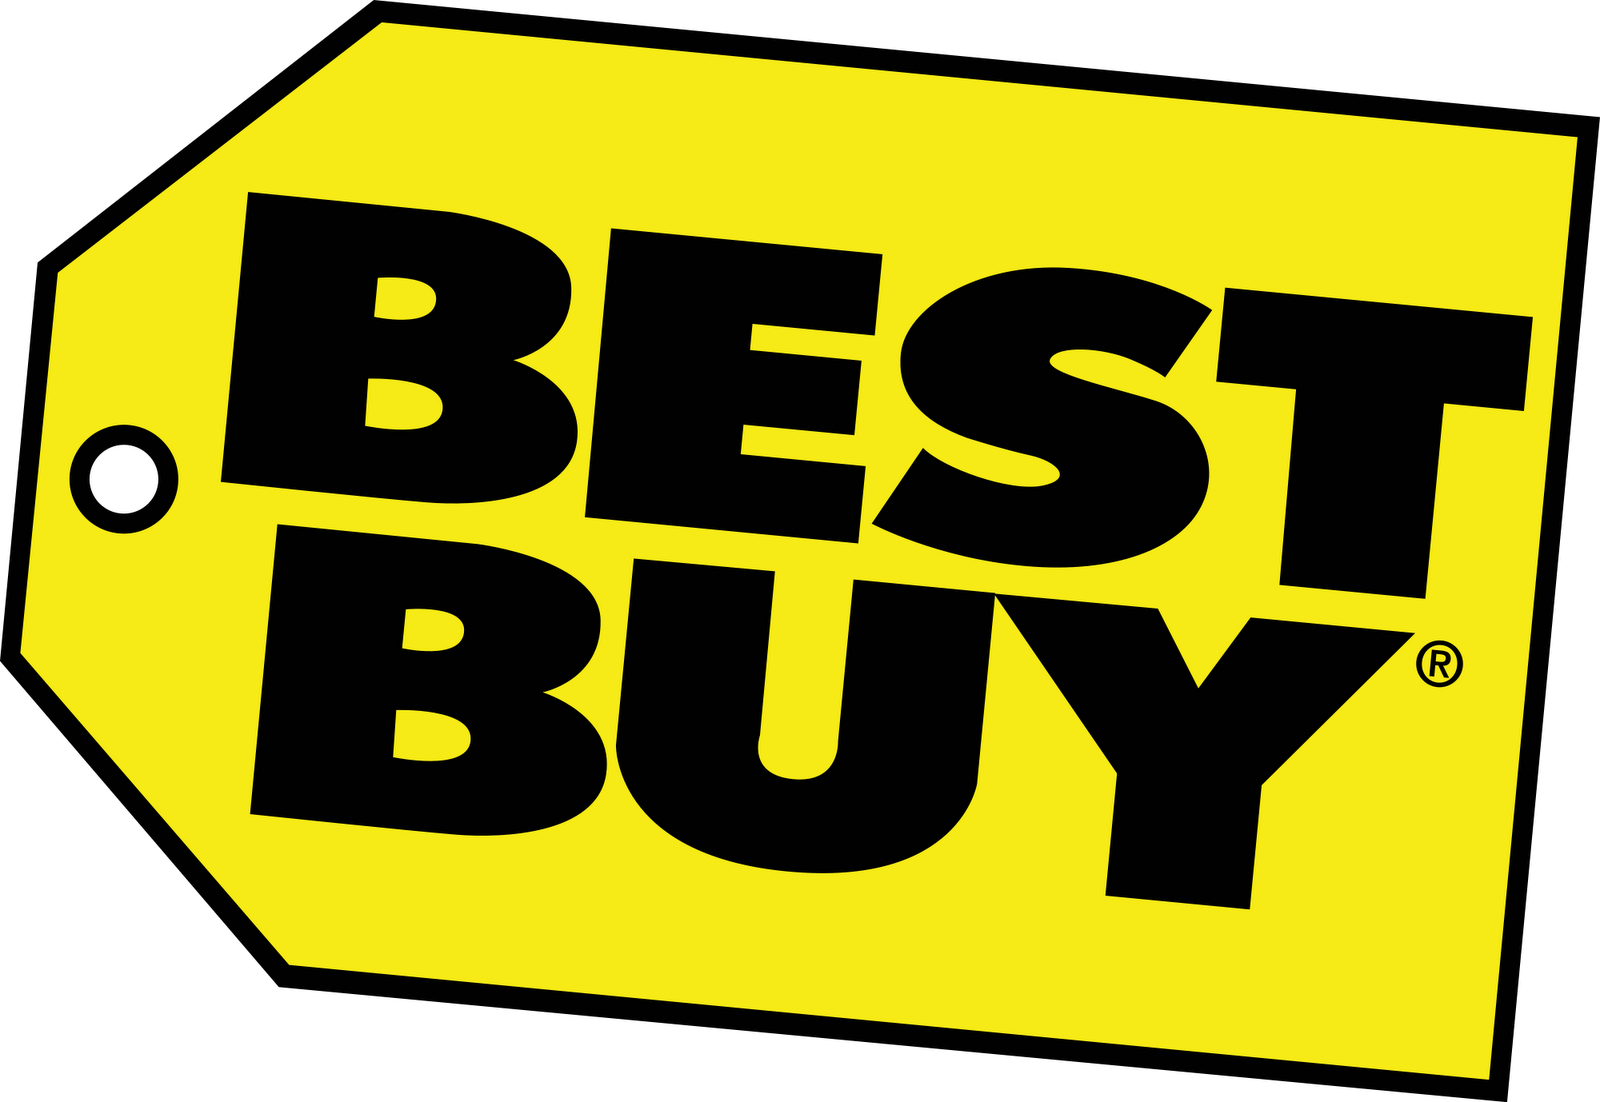 Best_buy_logo.png